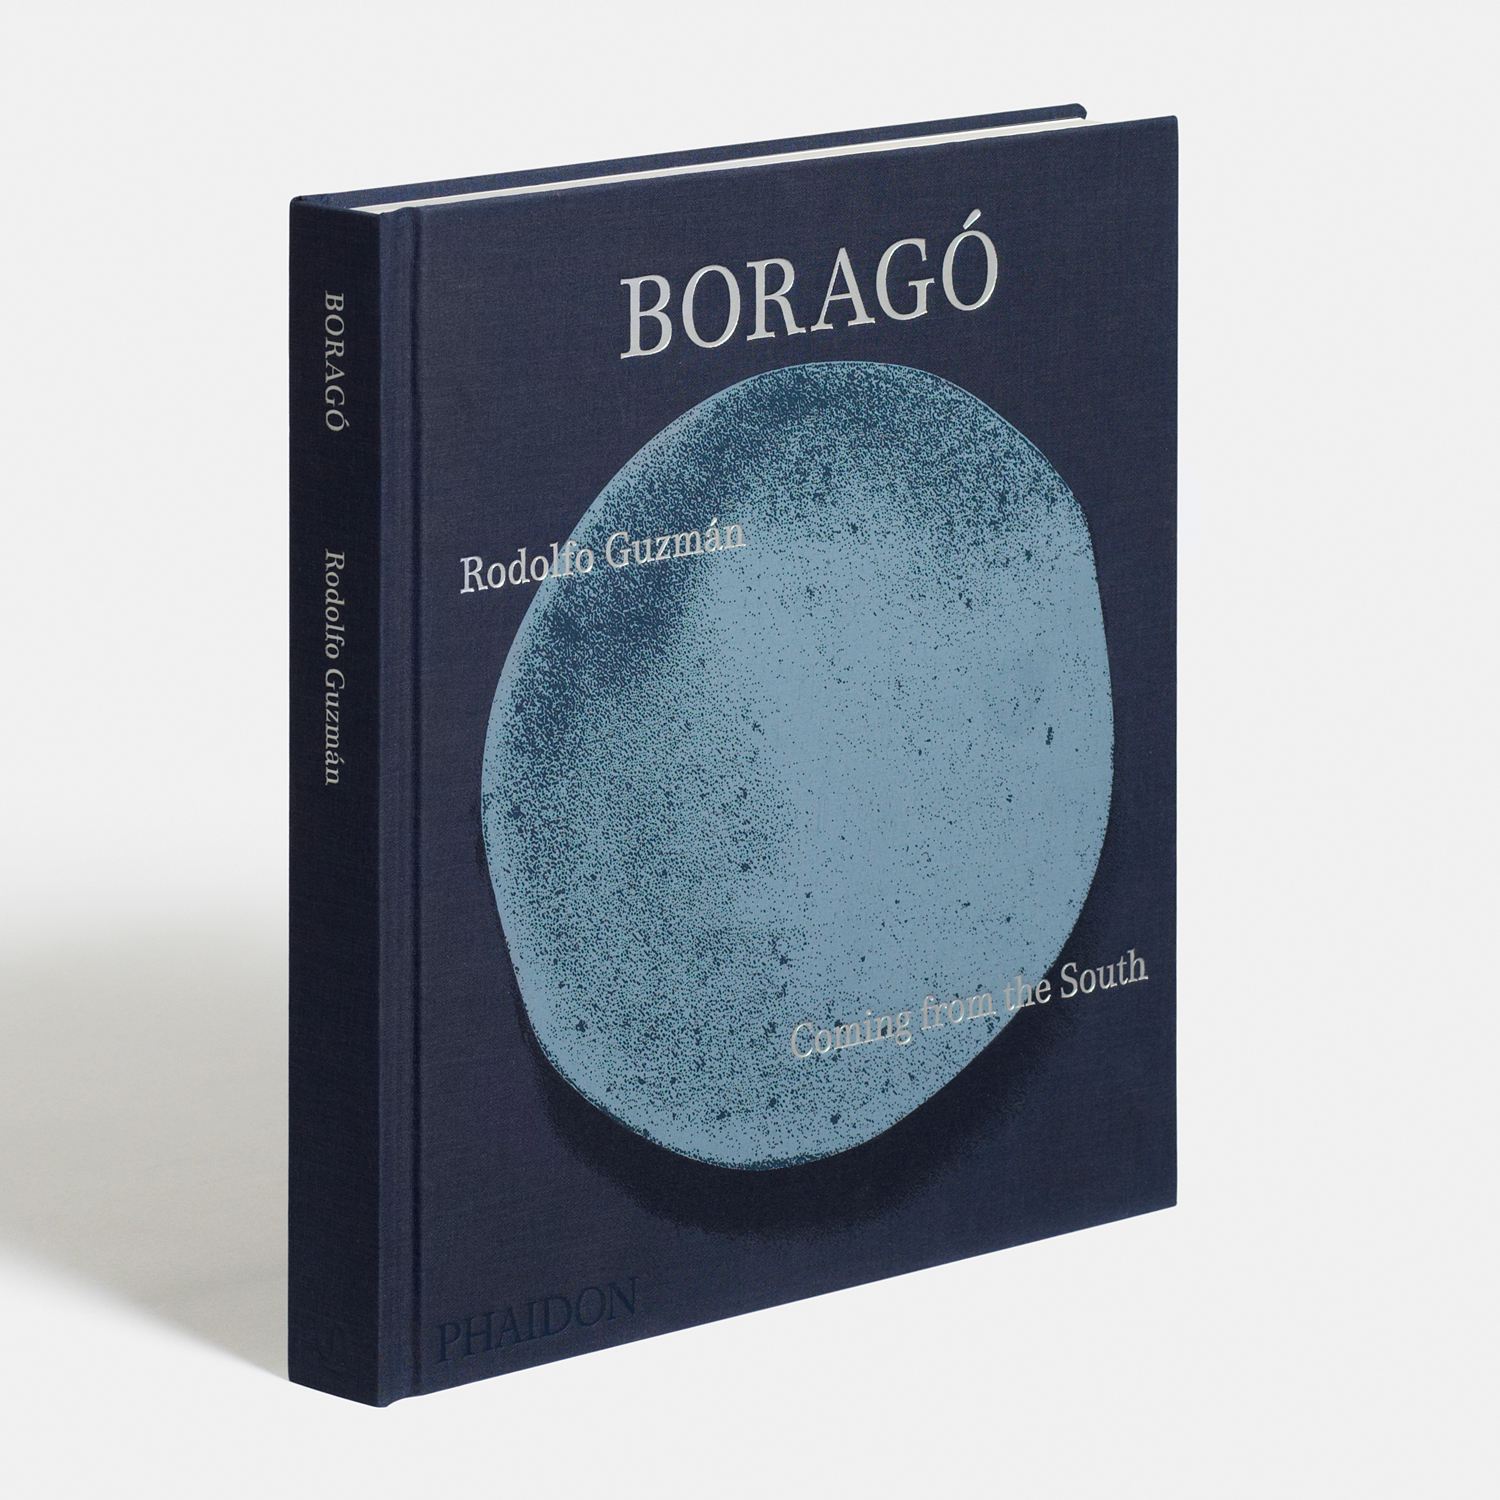 Borago by Rodolfo Guzman